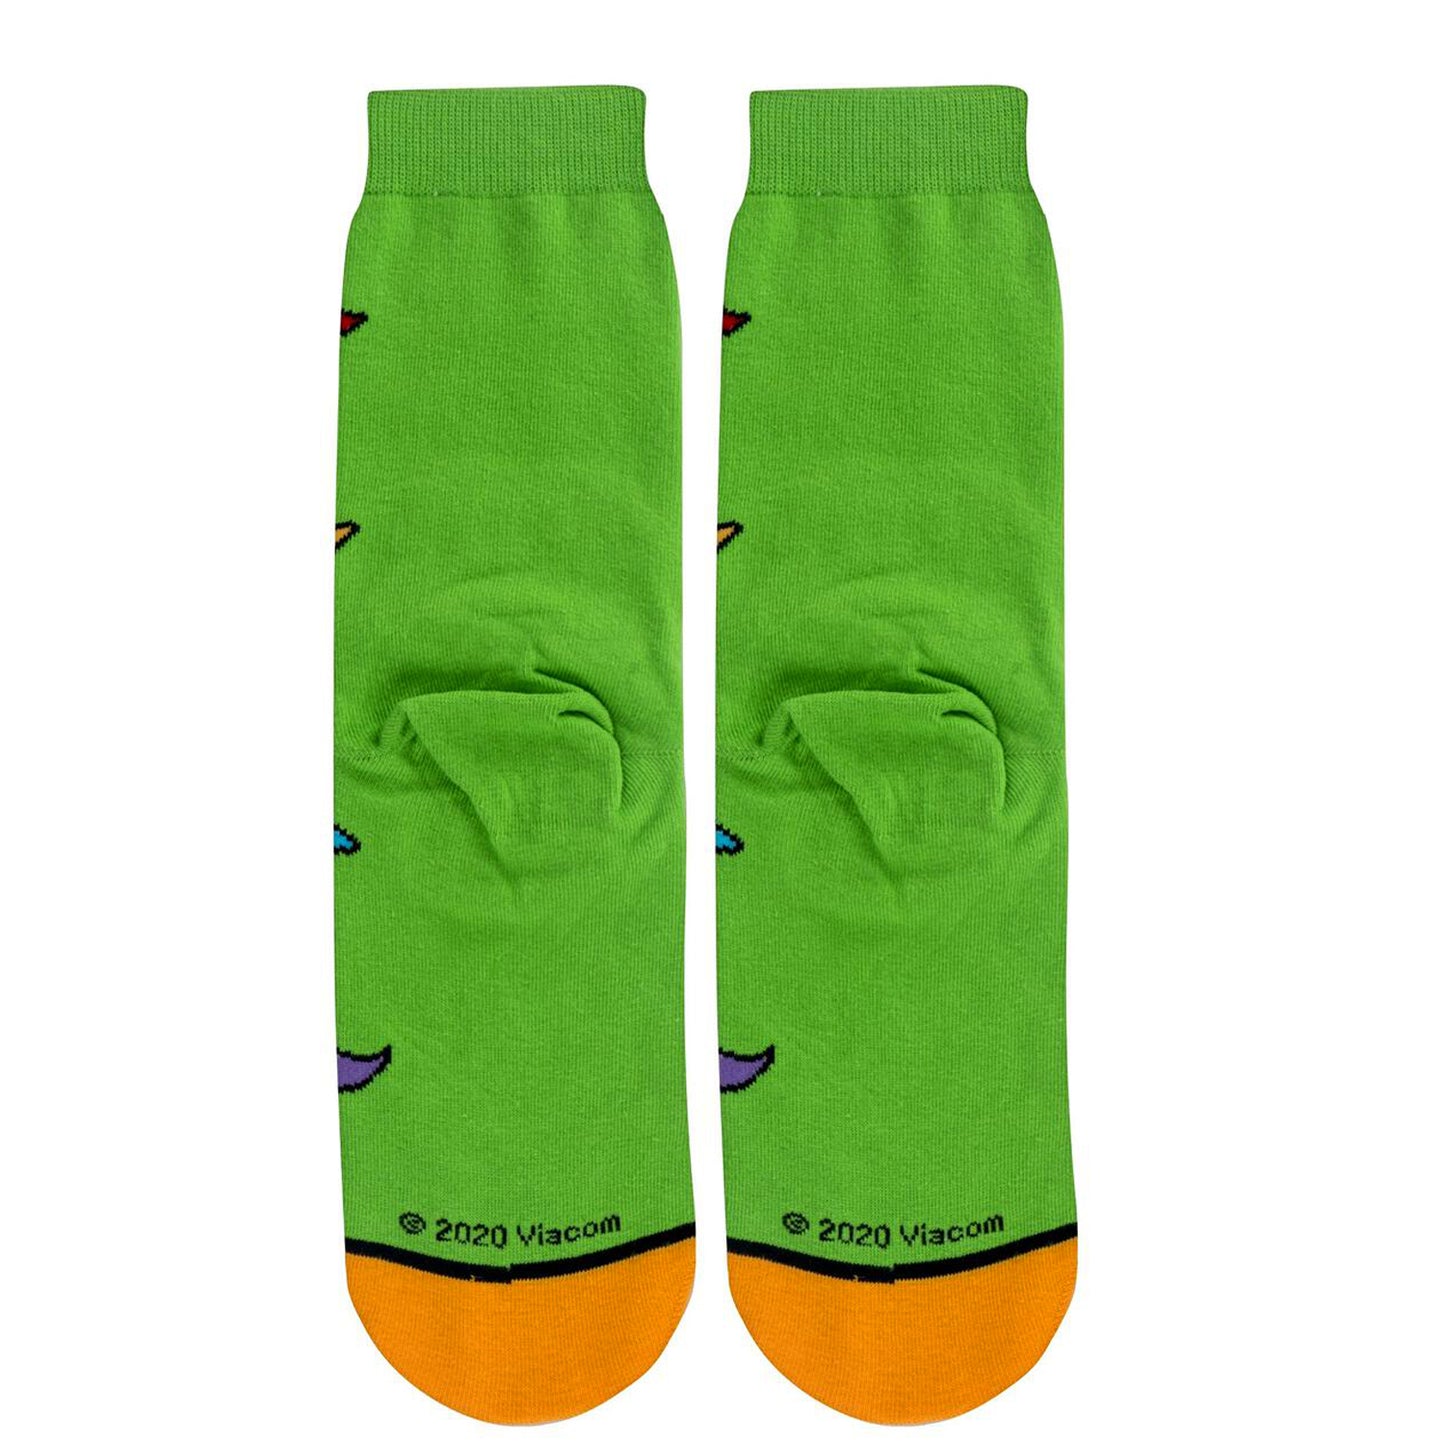 Odd Sox Women's Crew Socks - Turtle Boys (TMNT)